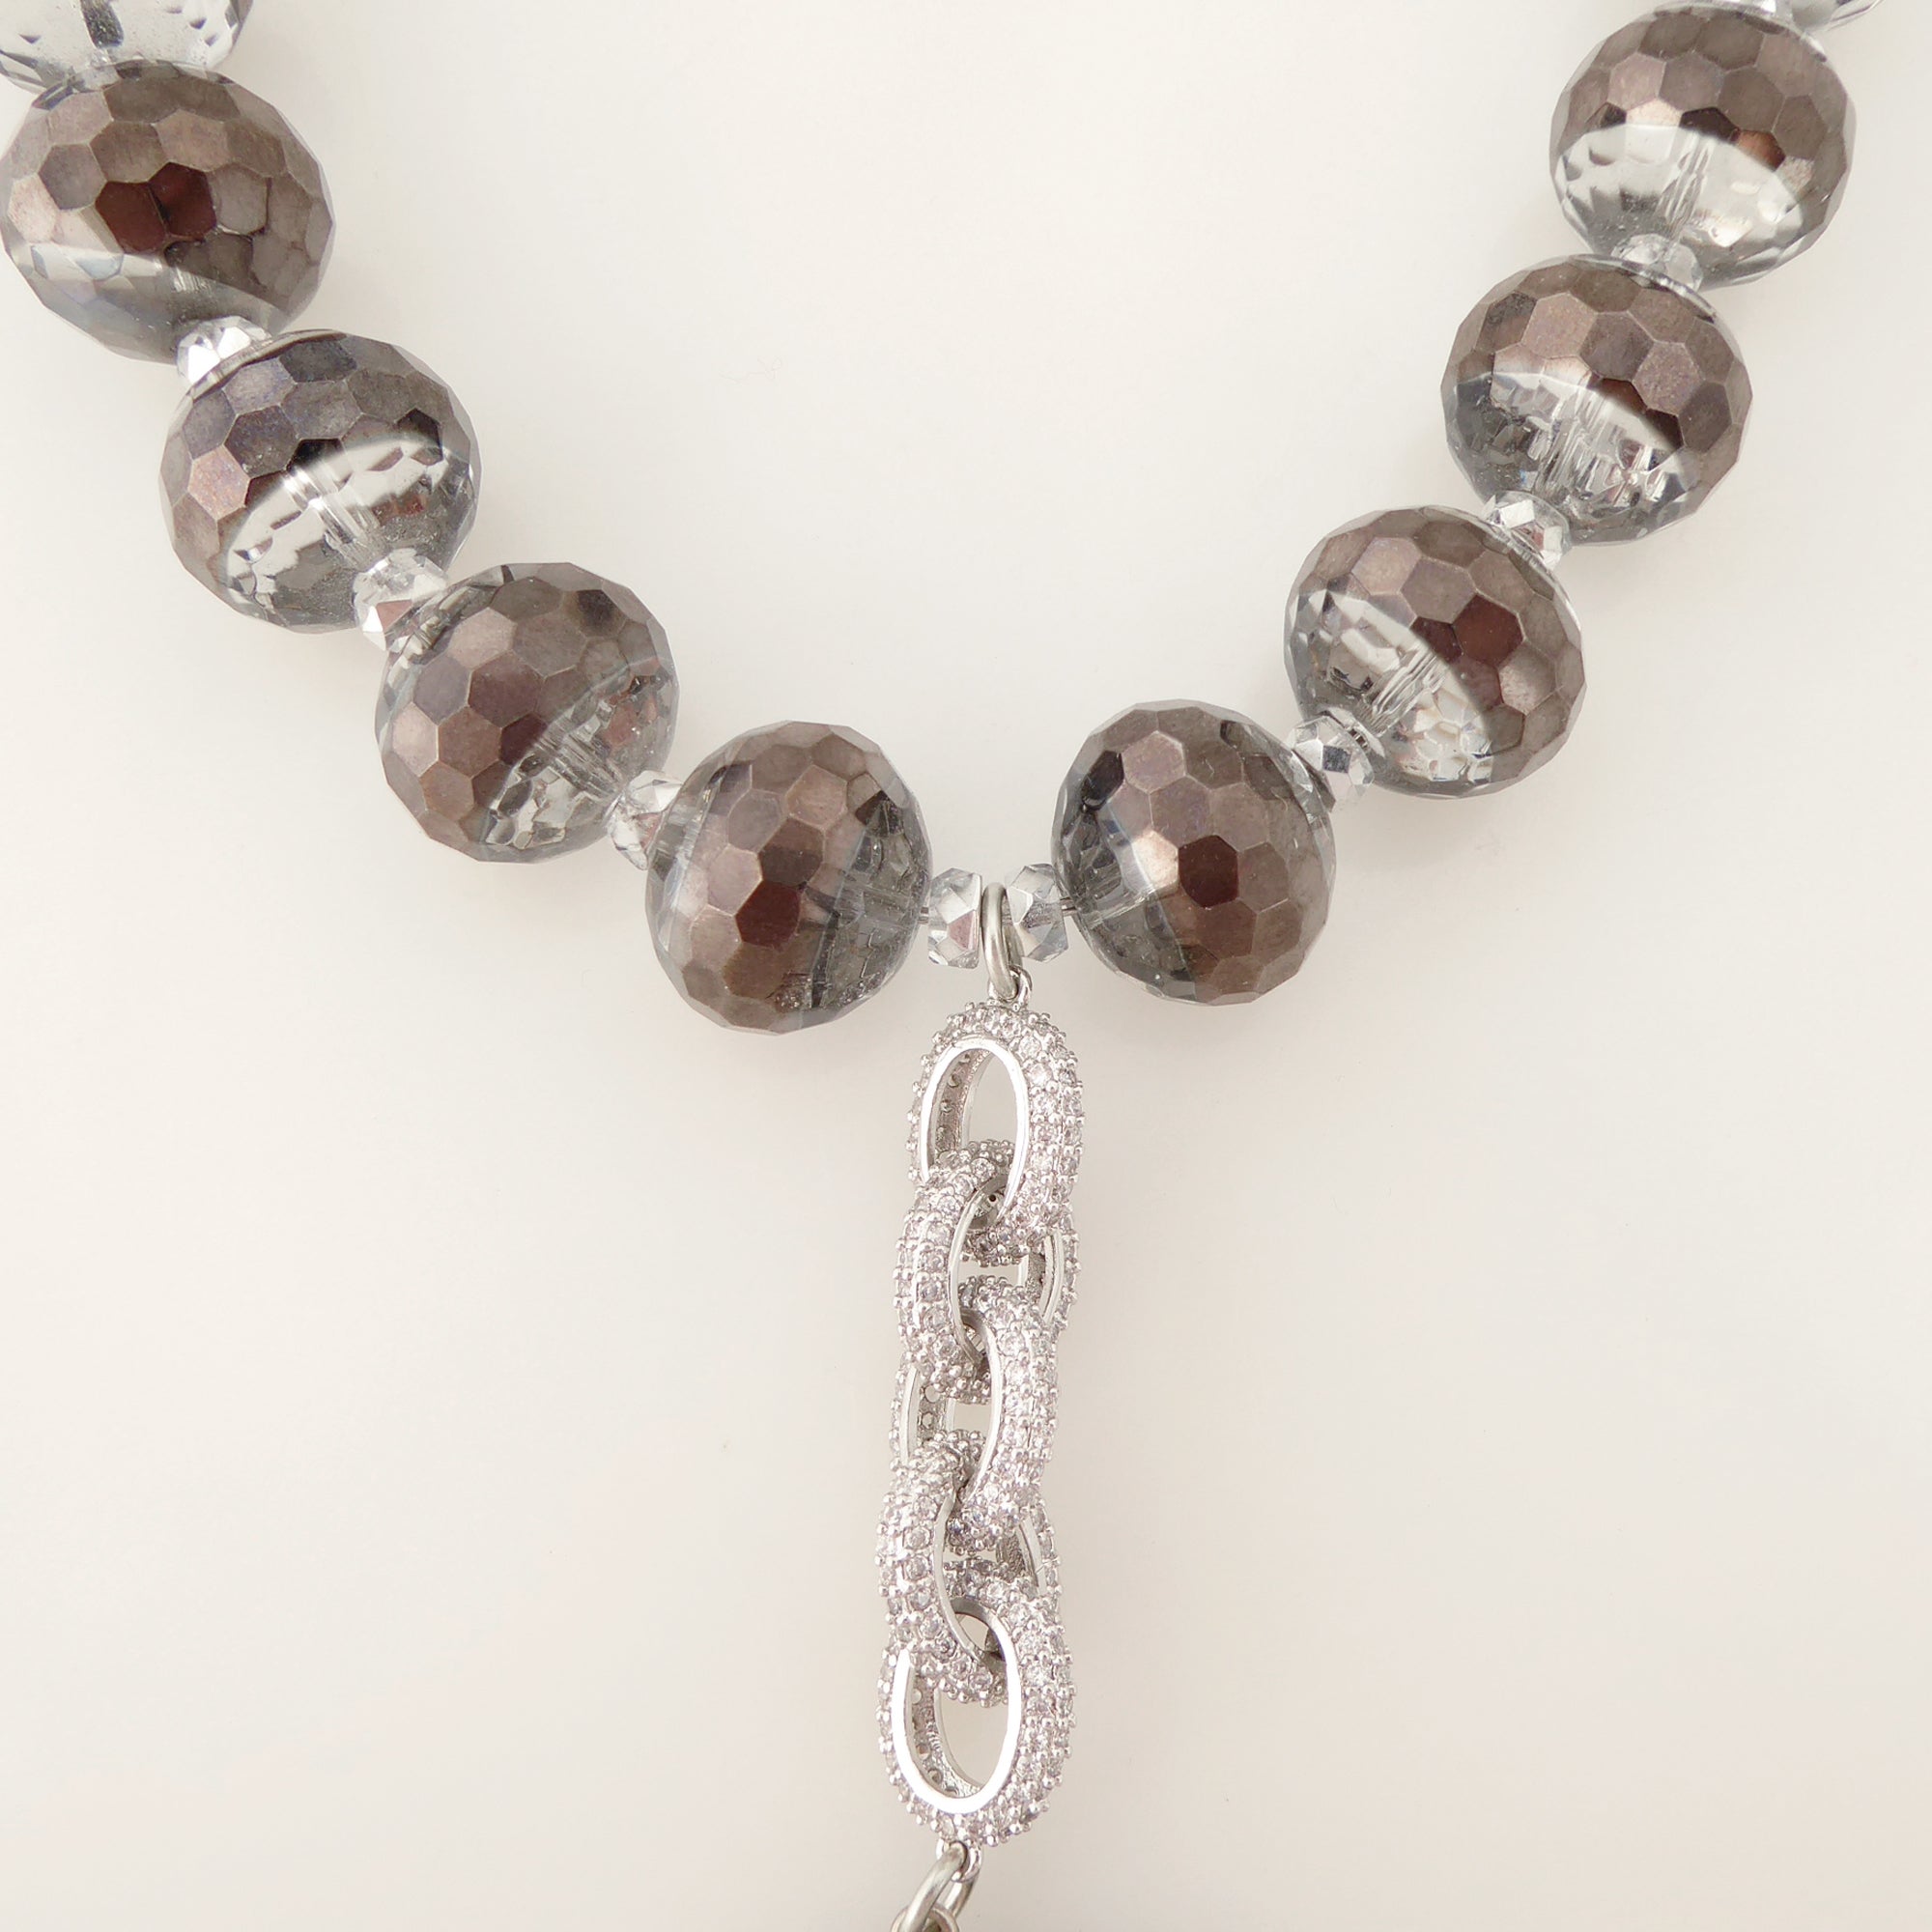 Gauntlet stone necklace by Jenny Dayco 5